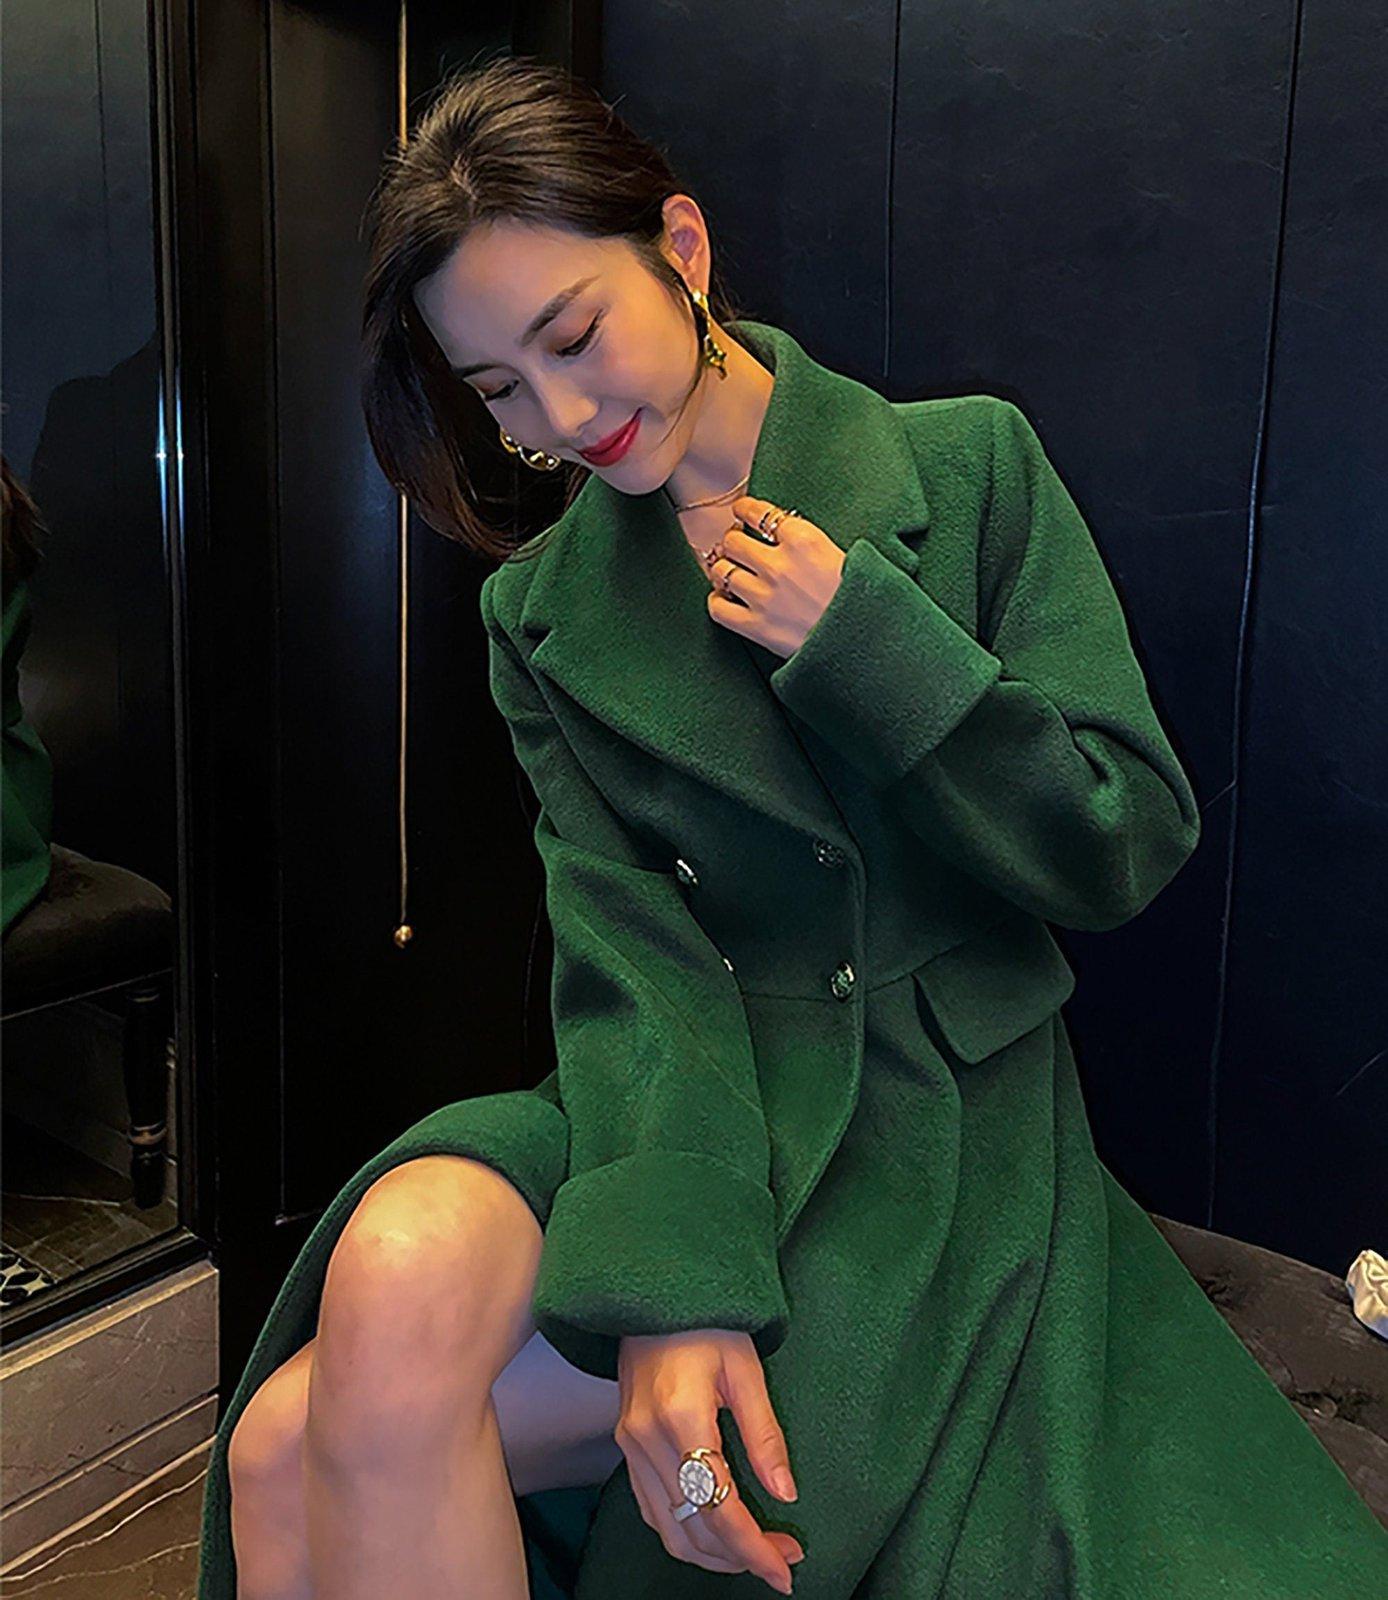 Long Wool Coat, Green Wool Coat, Wool Coat Women, Long Sleeves